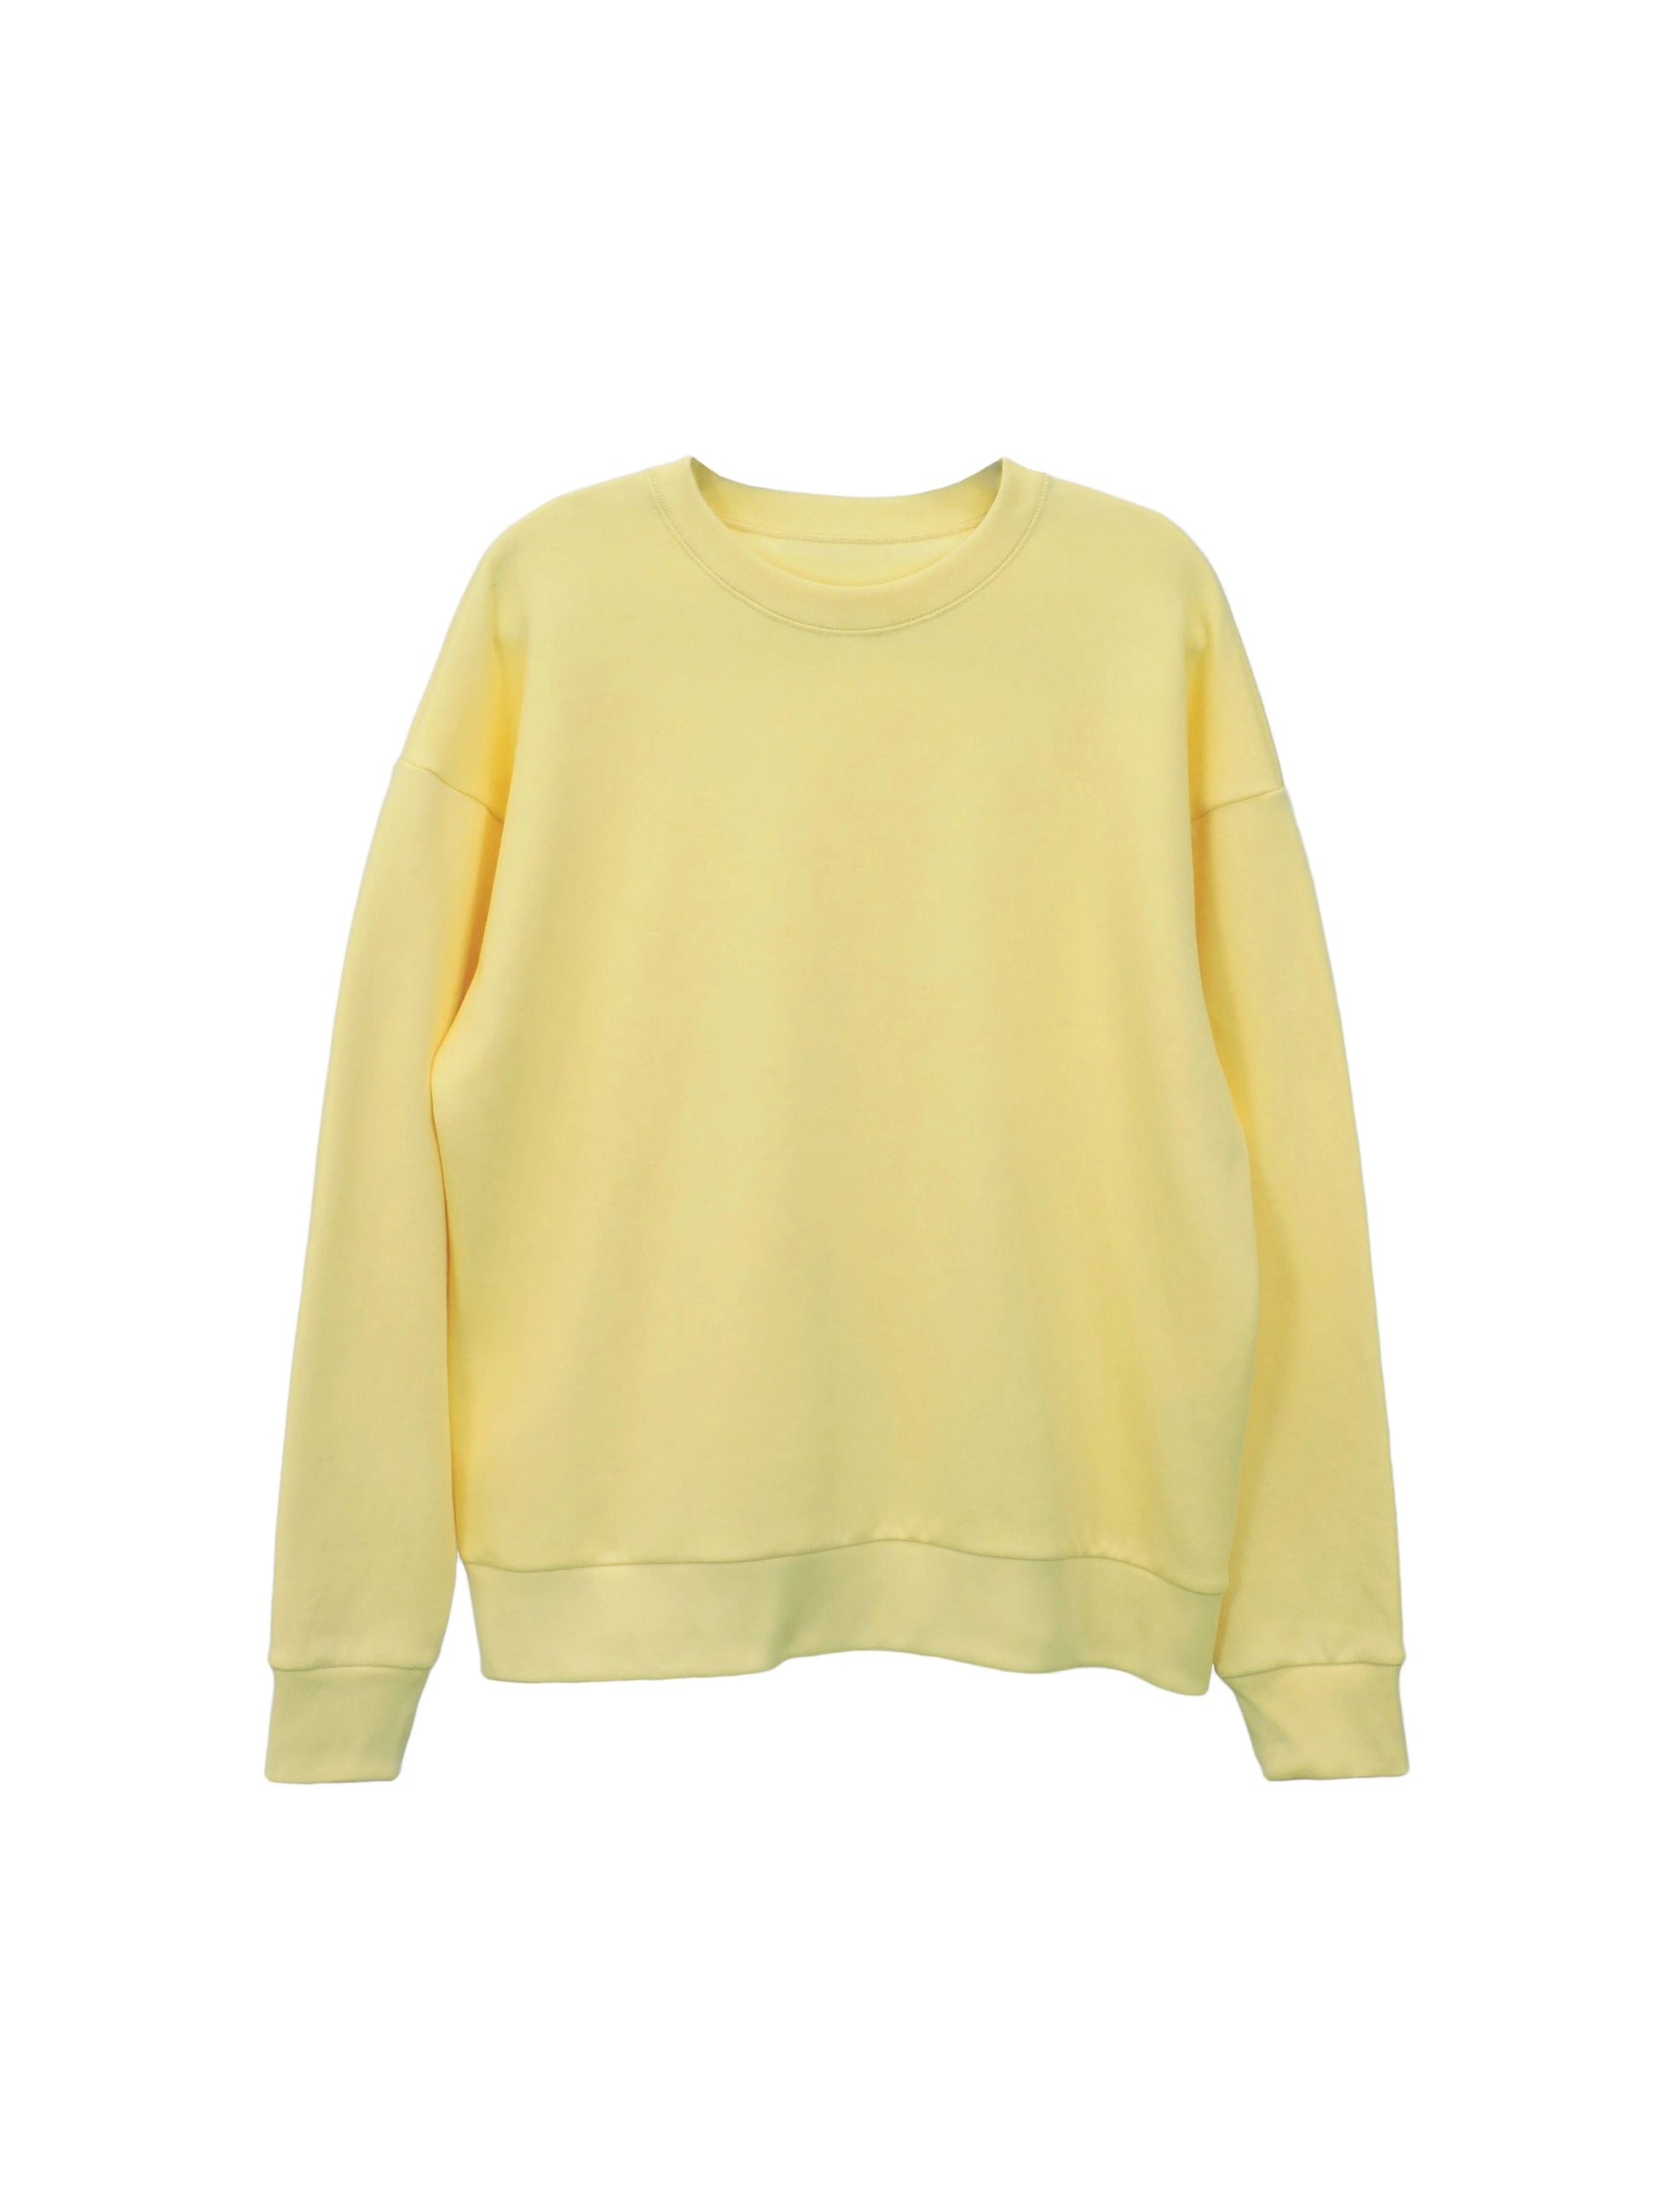 Park Crewneck Sweater - Daffodil Yellow Fleece